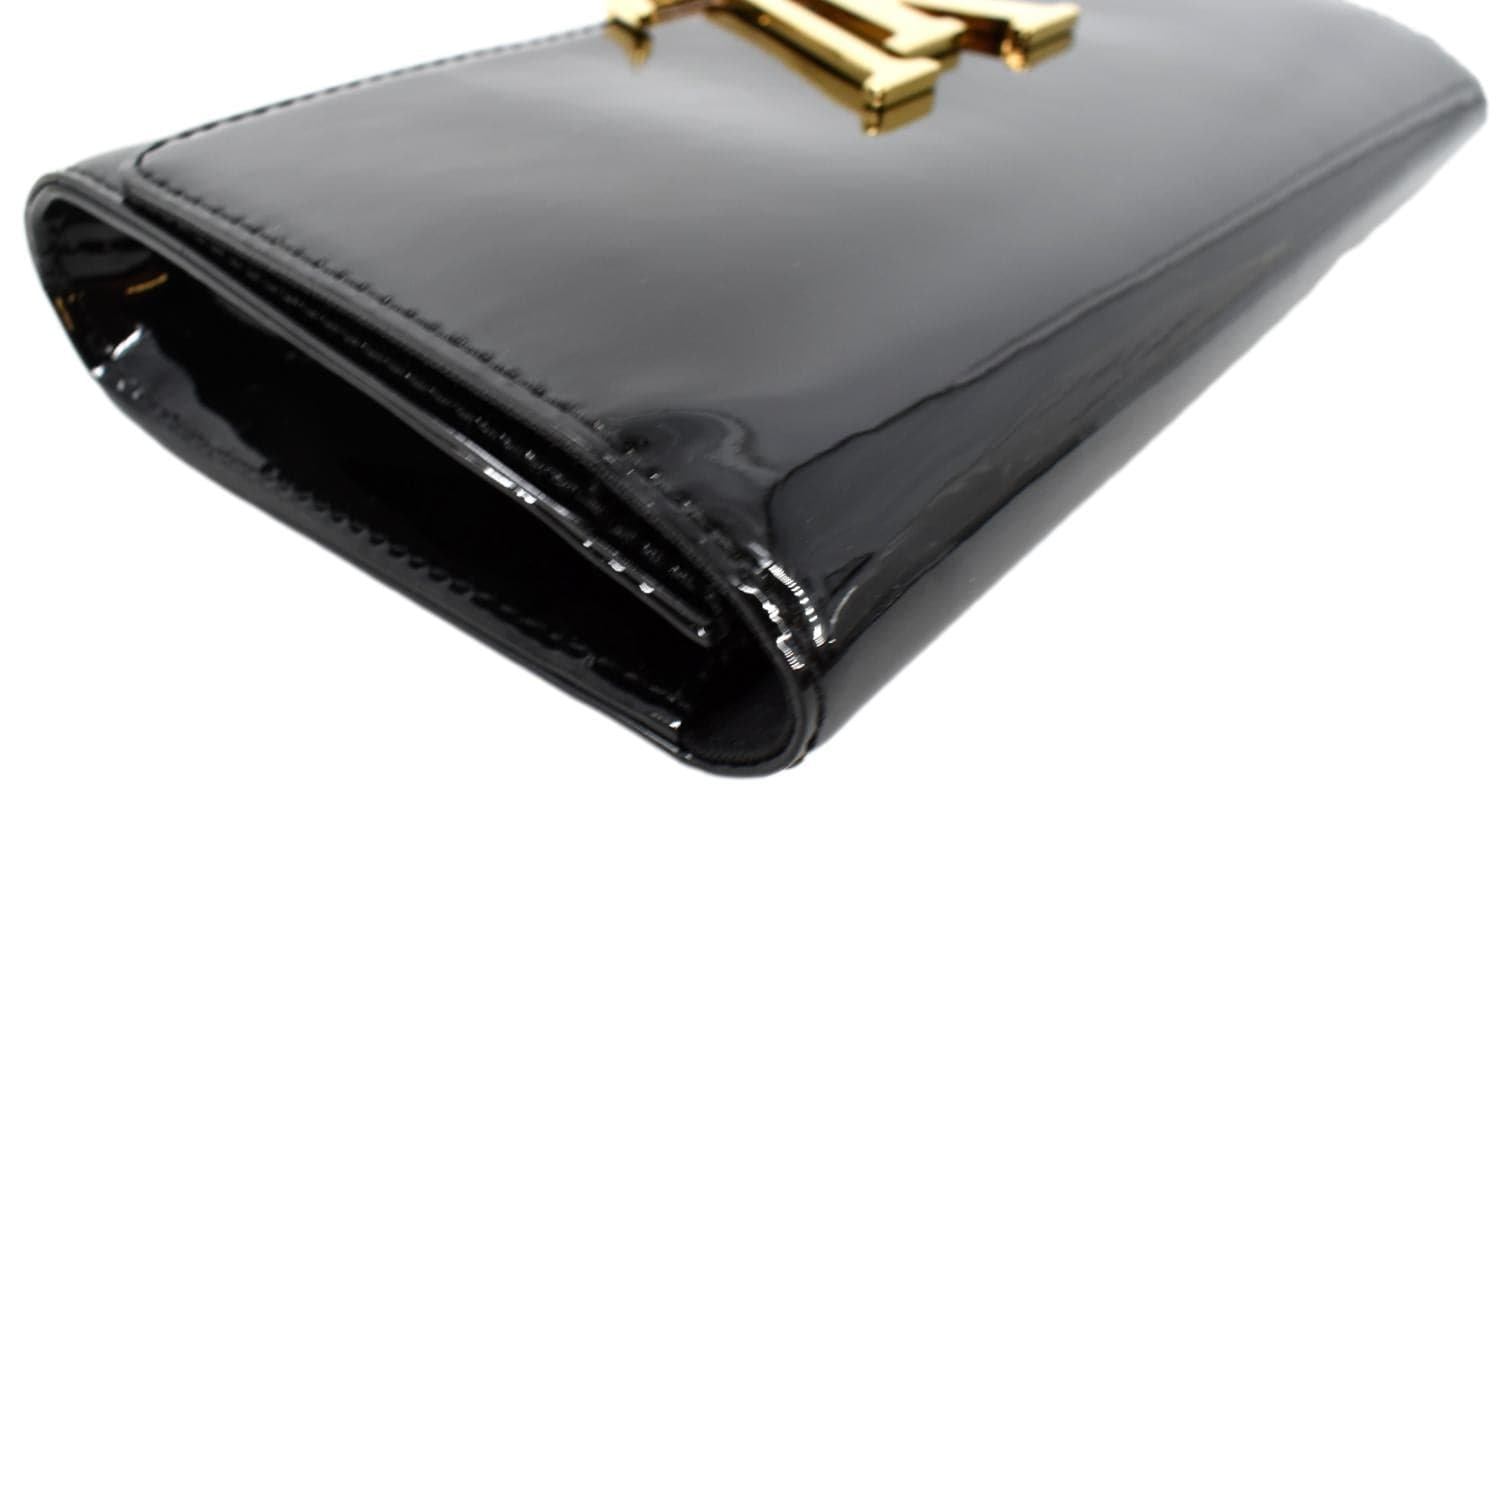 Sold at Auction: Louis Vuitton Patent Leather Wallet